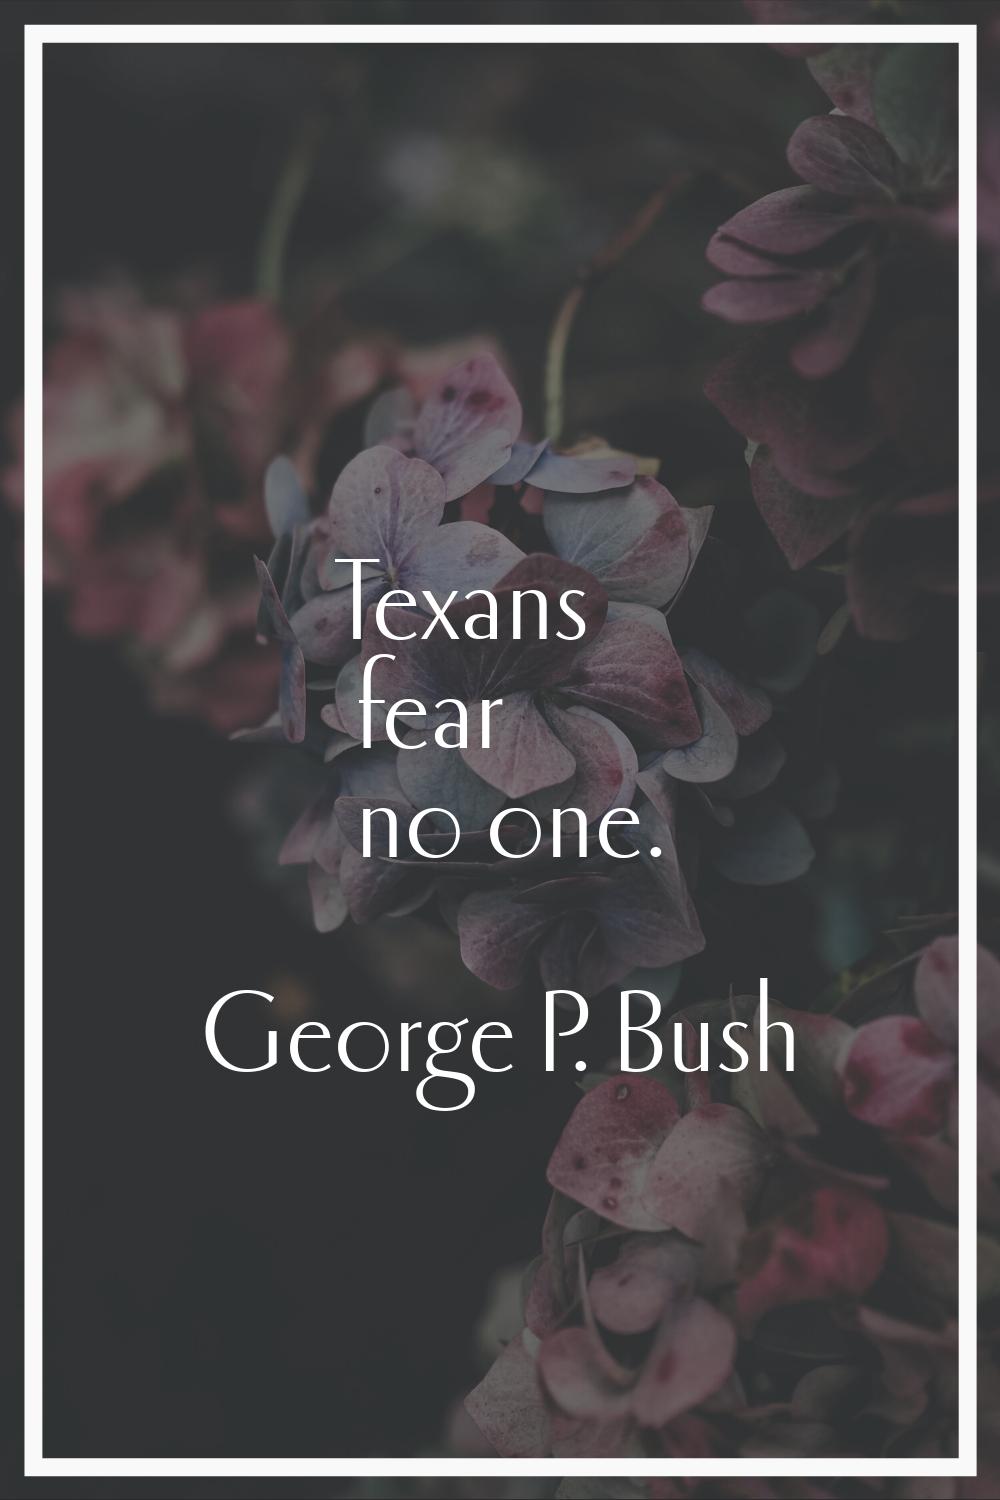 Texans fear no one.